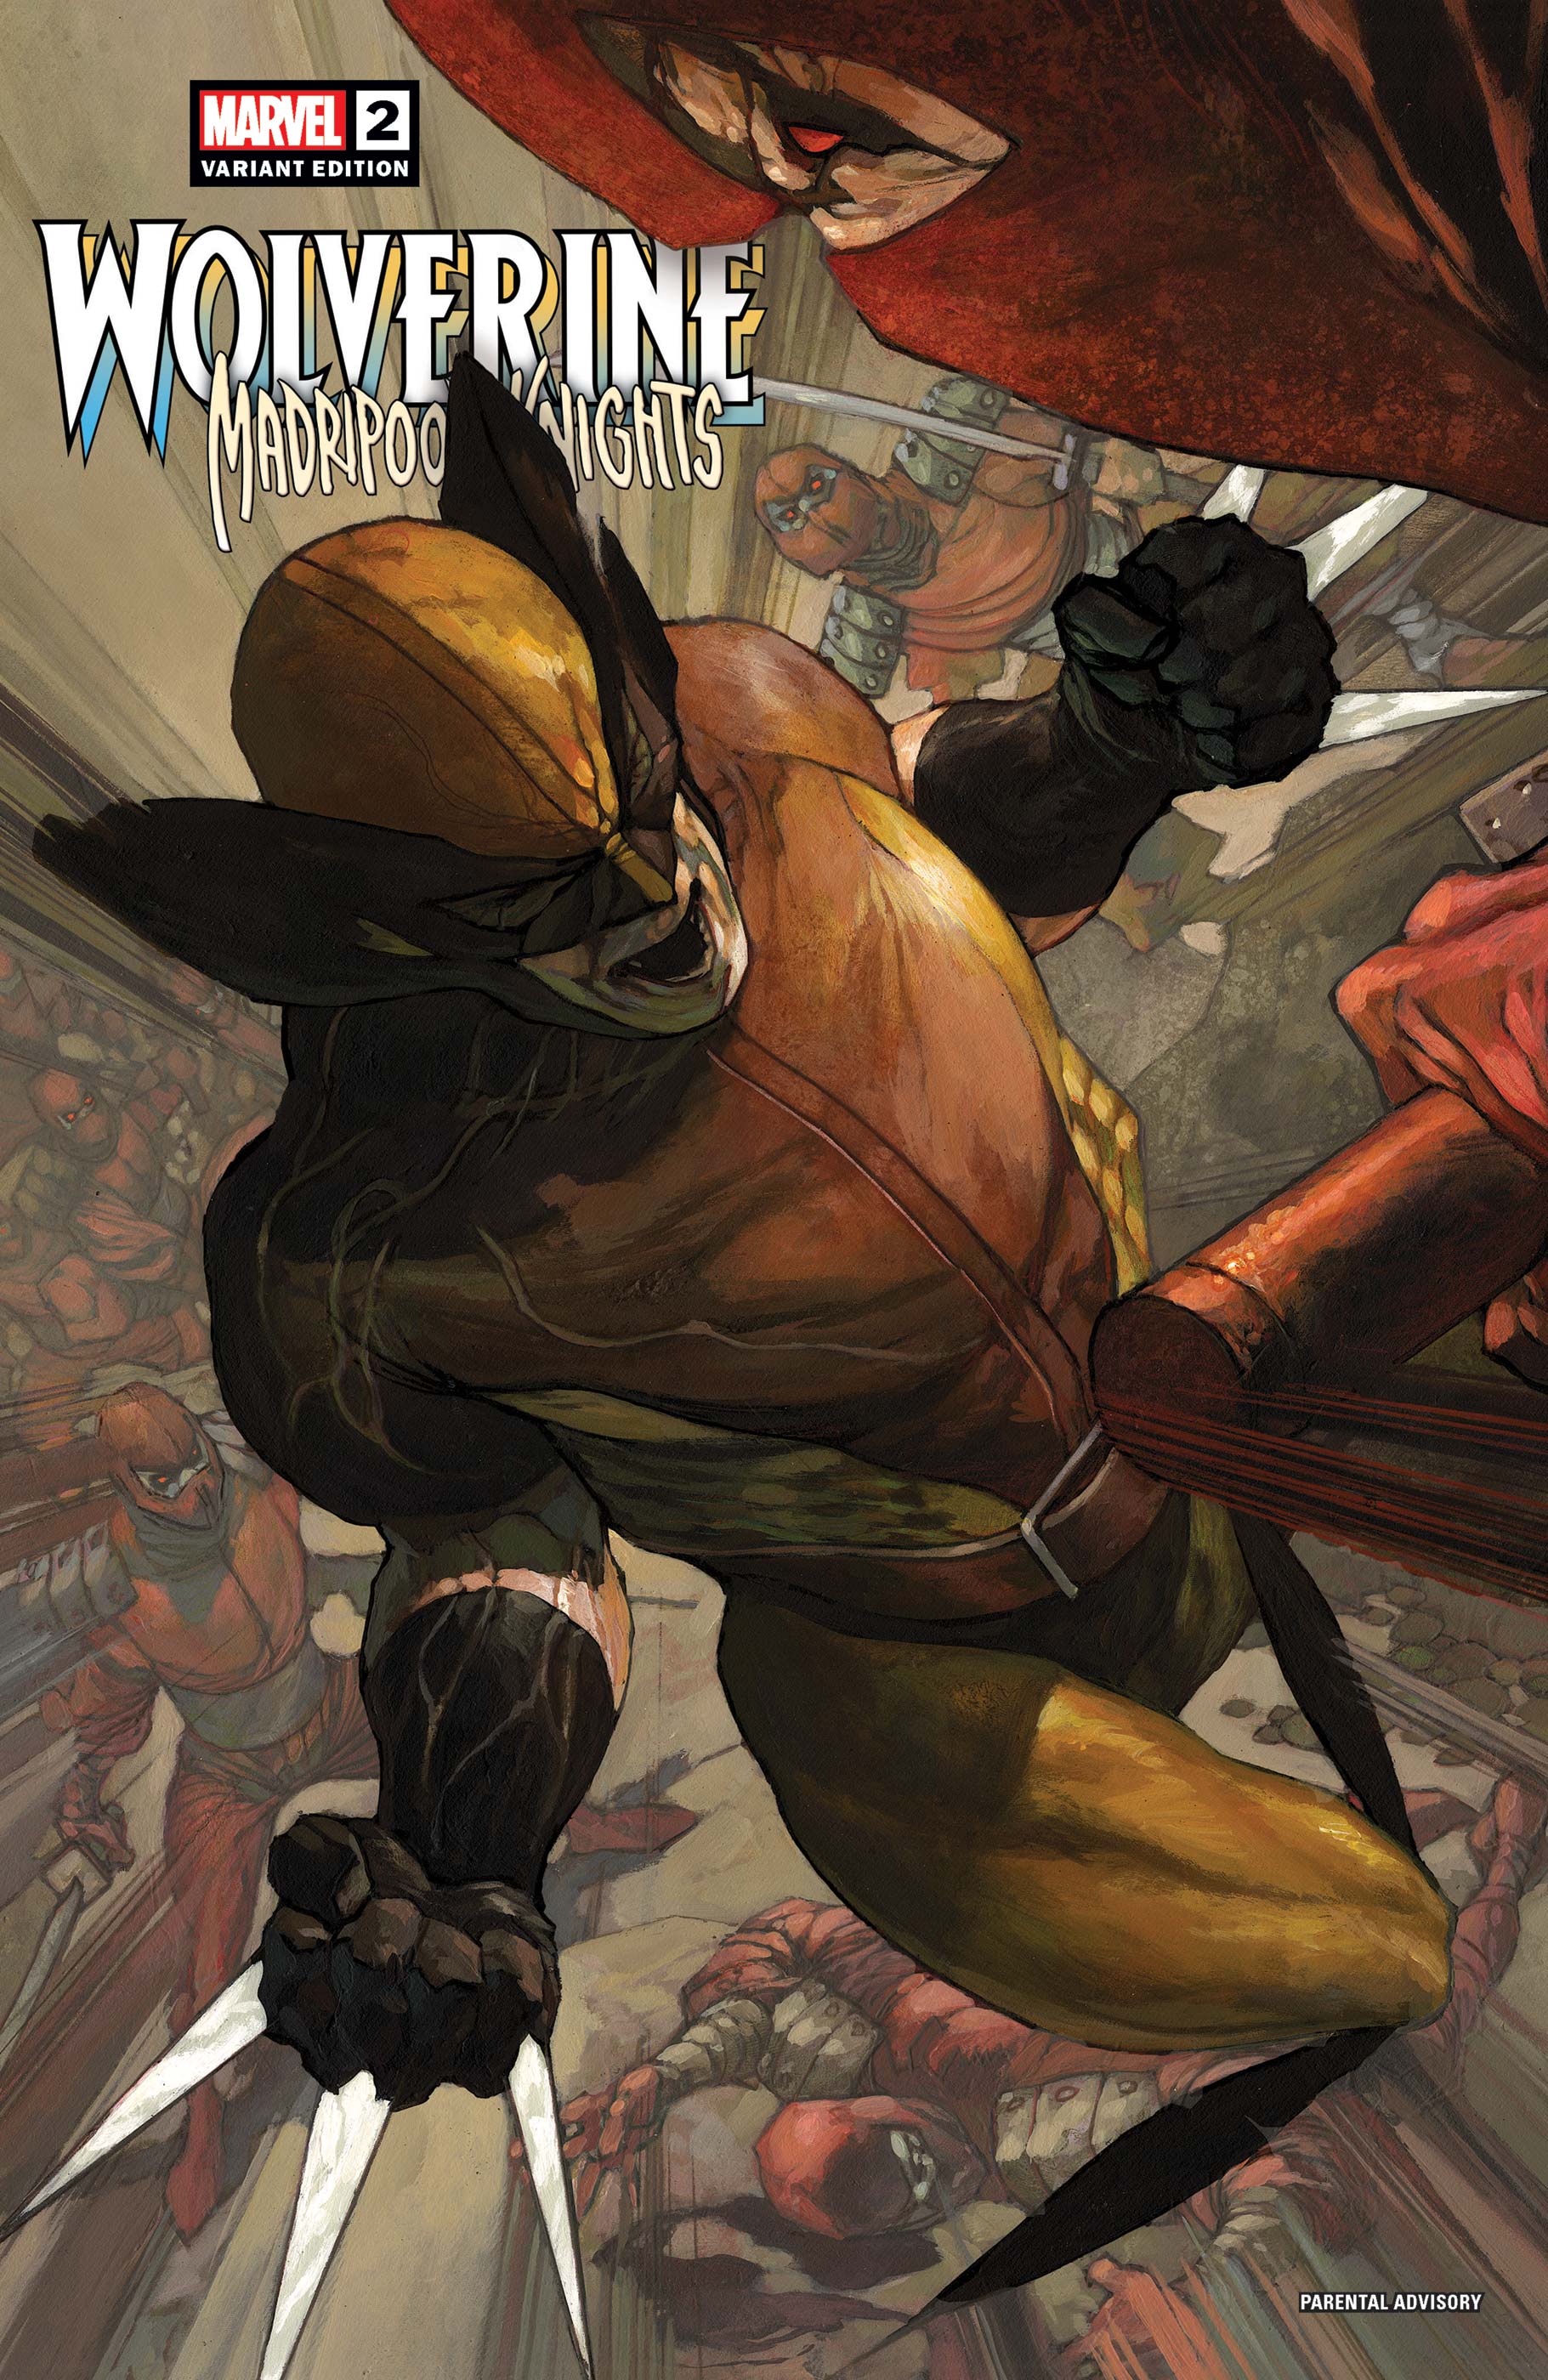 Wolverine: Madripoor Knights (2024) #2 (Variant)